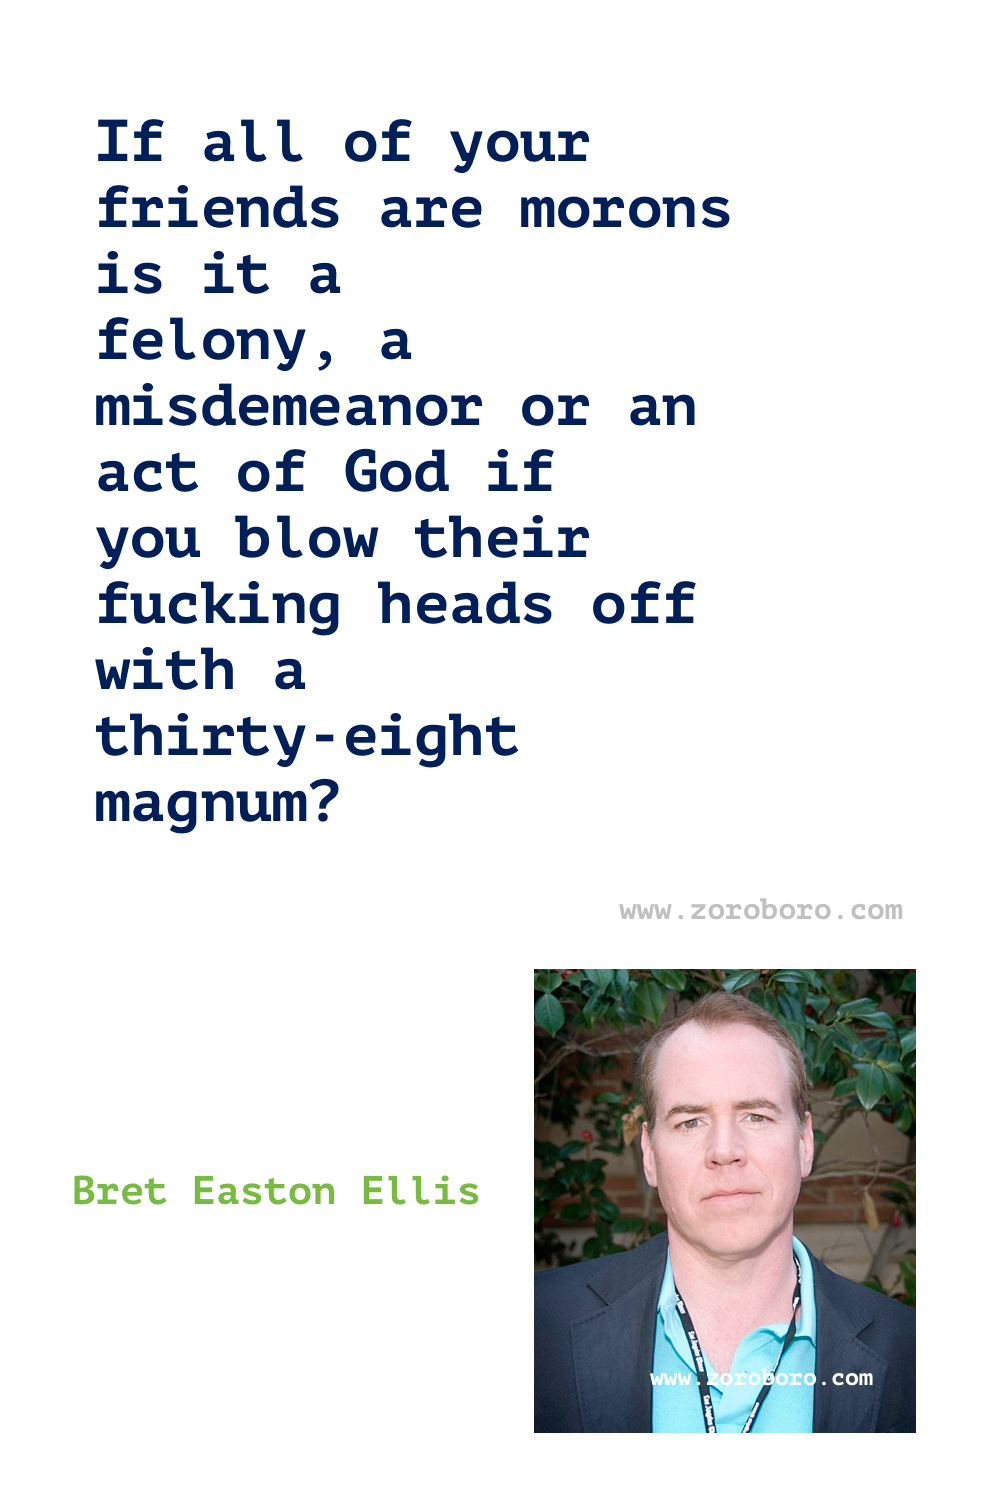 Bret Easton Ellis Quotes. Bret Ellis Books Quotes. Bret Easton Ellis American Psycho Quotes , Less Than Zero (novel), The Rules of Attraction, Glamorama & Lunar Park. Bret Easton Ellis Quotes.